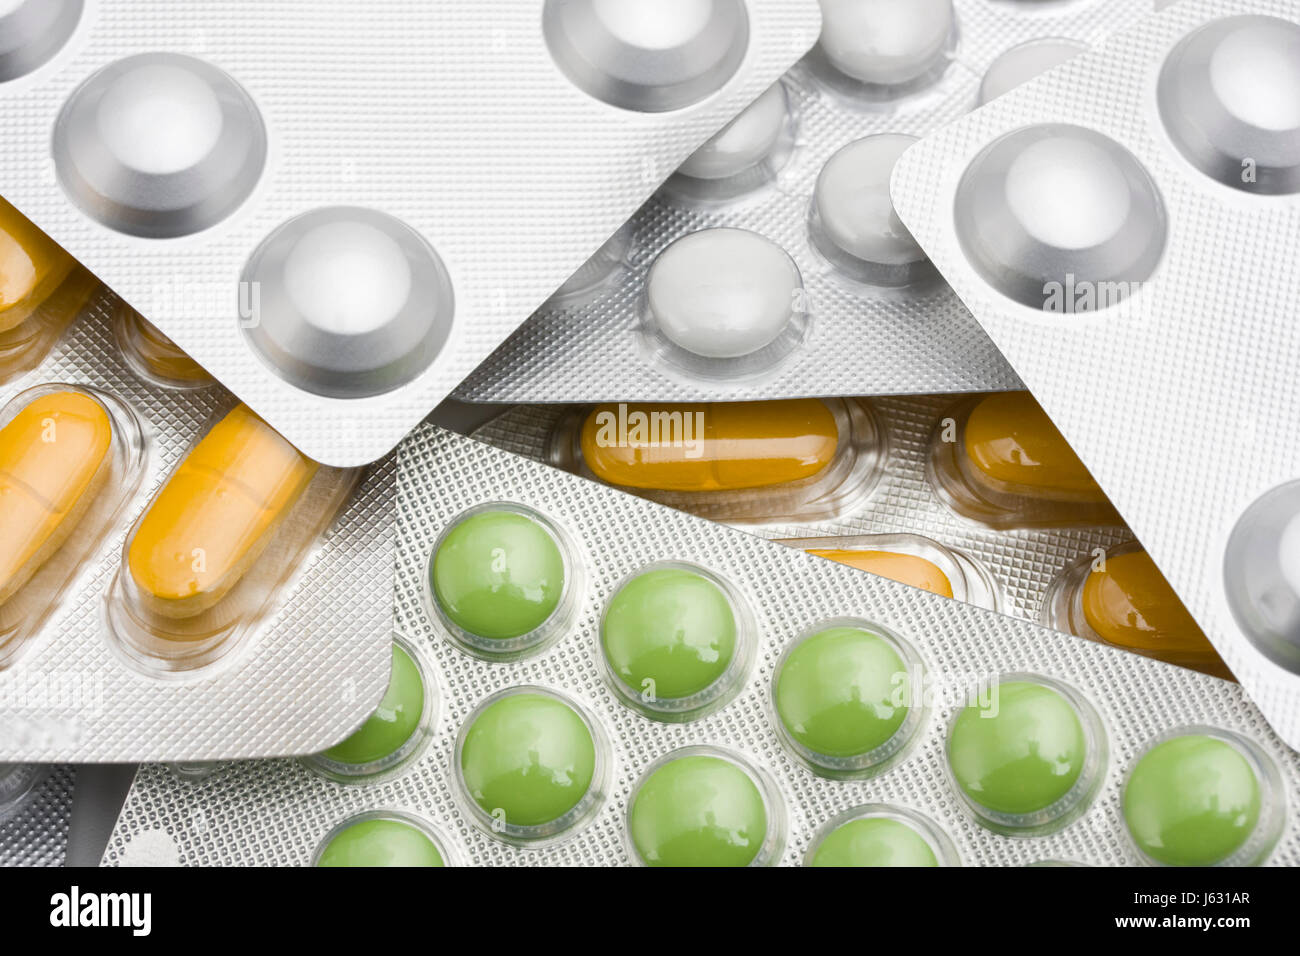 means agent medicine drug remedy substance tablet blister pharmacy drugstore Stock Photo